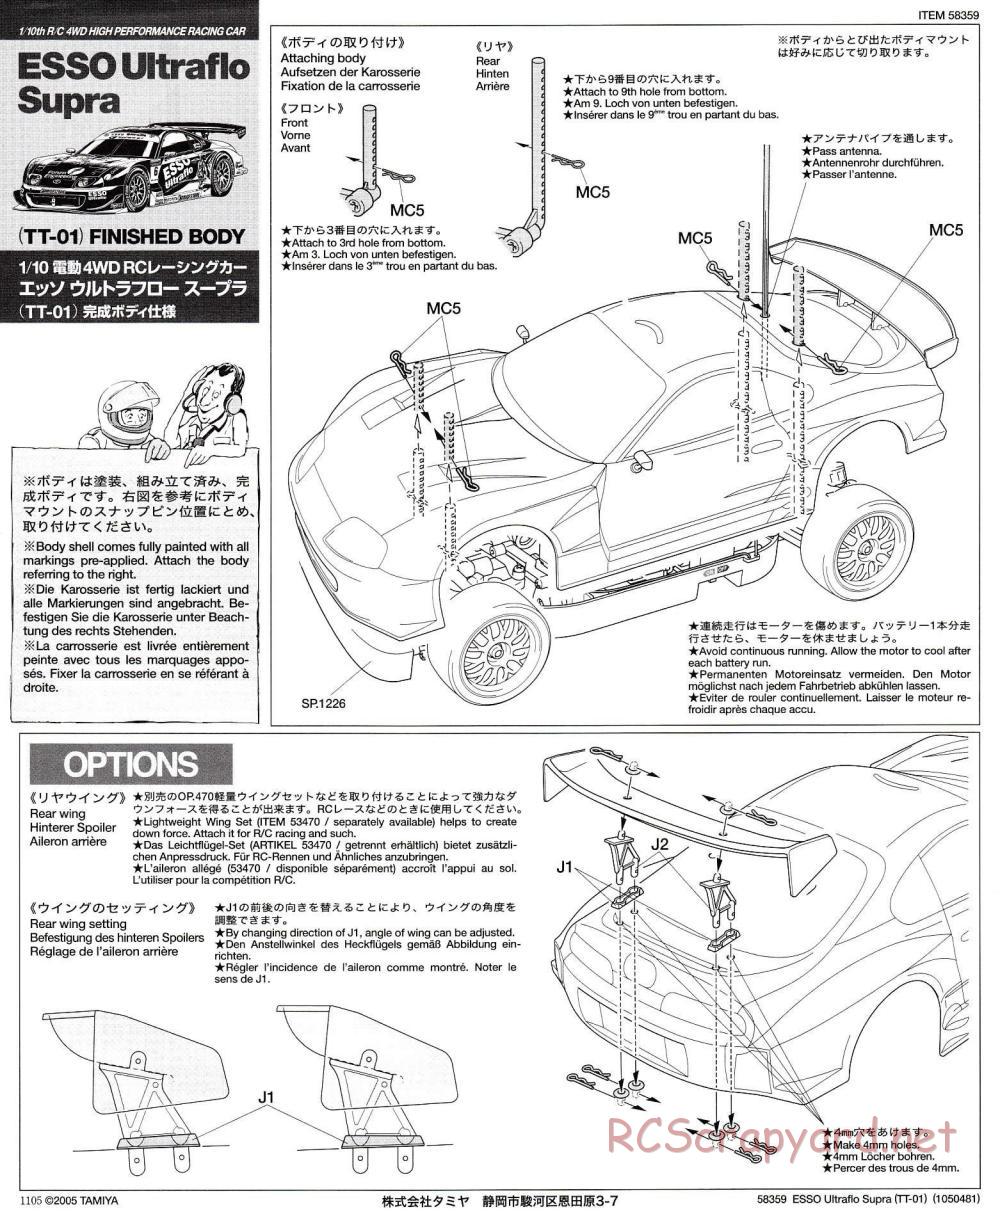 Tamiya - Esso Ultraflo Supra - TA05 Chassis - Body Manual - Page 1